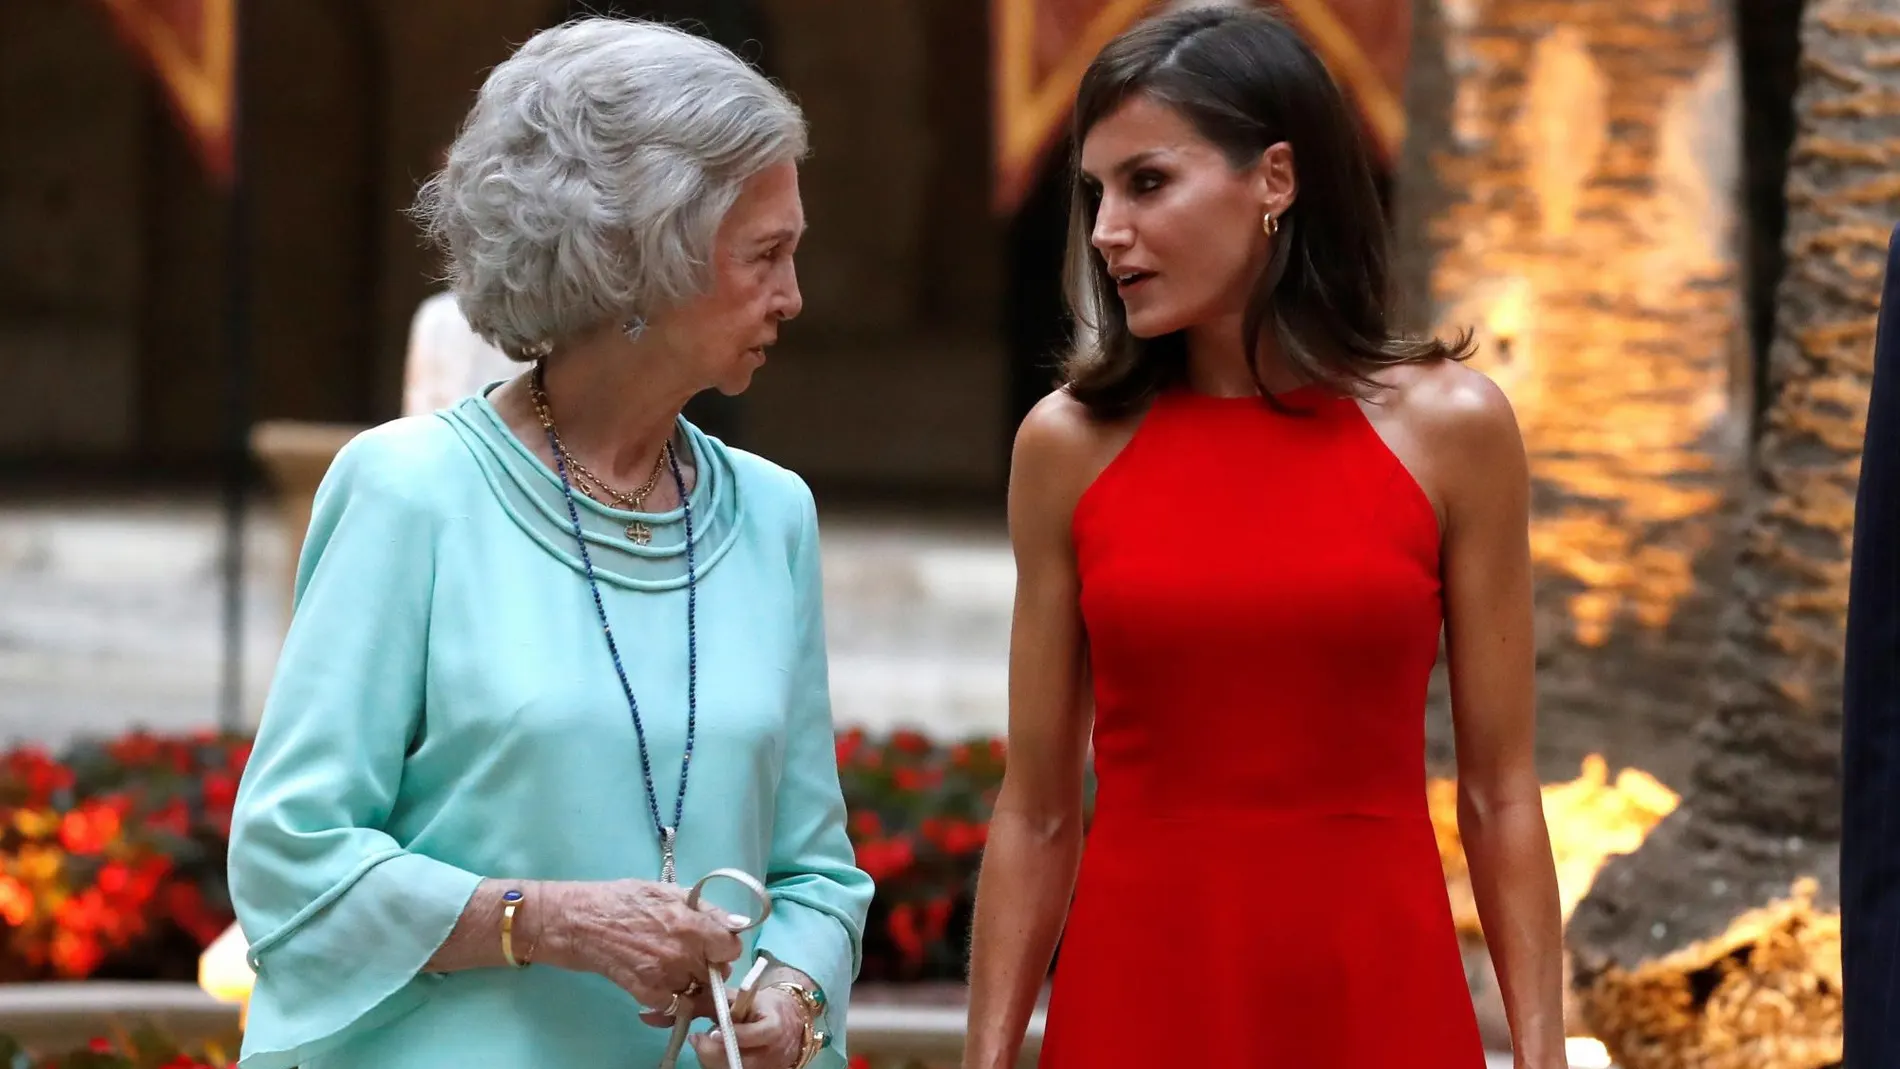 La Reina Letizia vuelve a triunfar con este sencillo vestido rojo